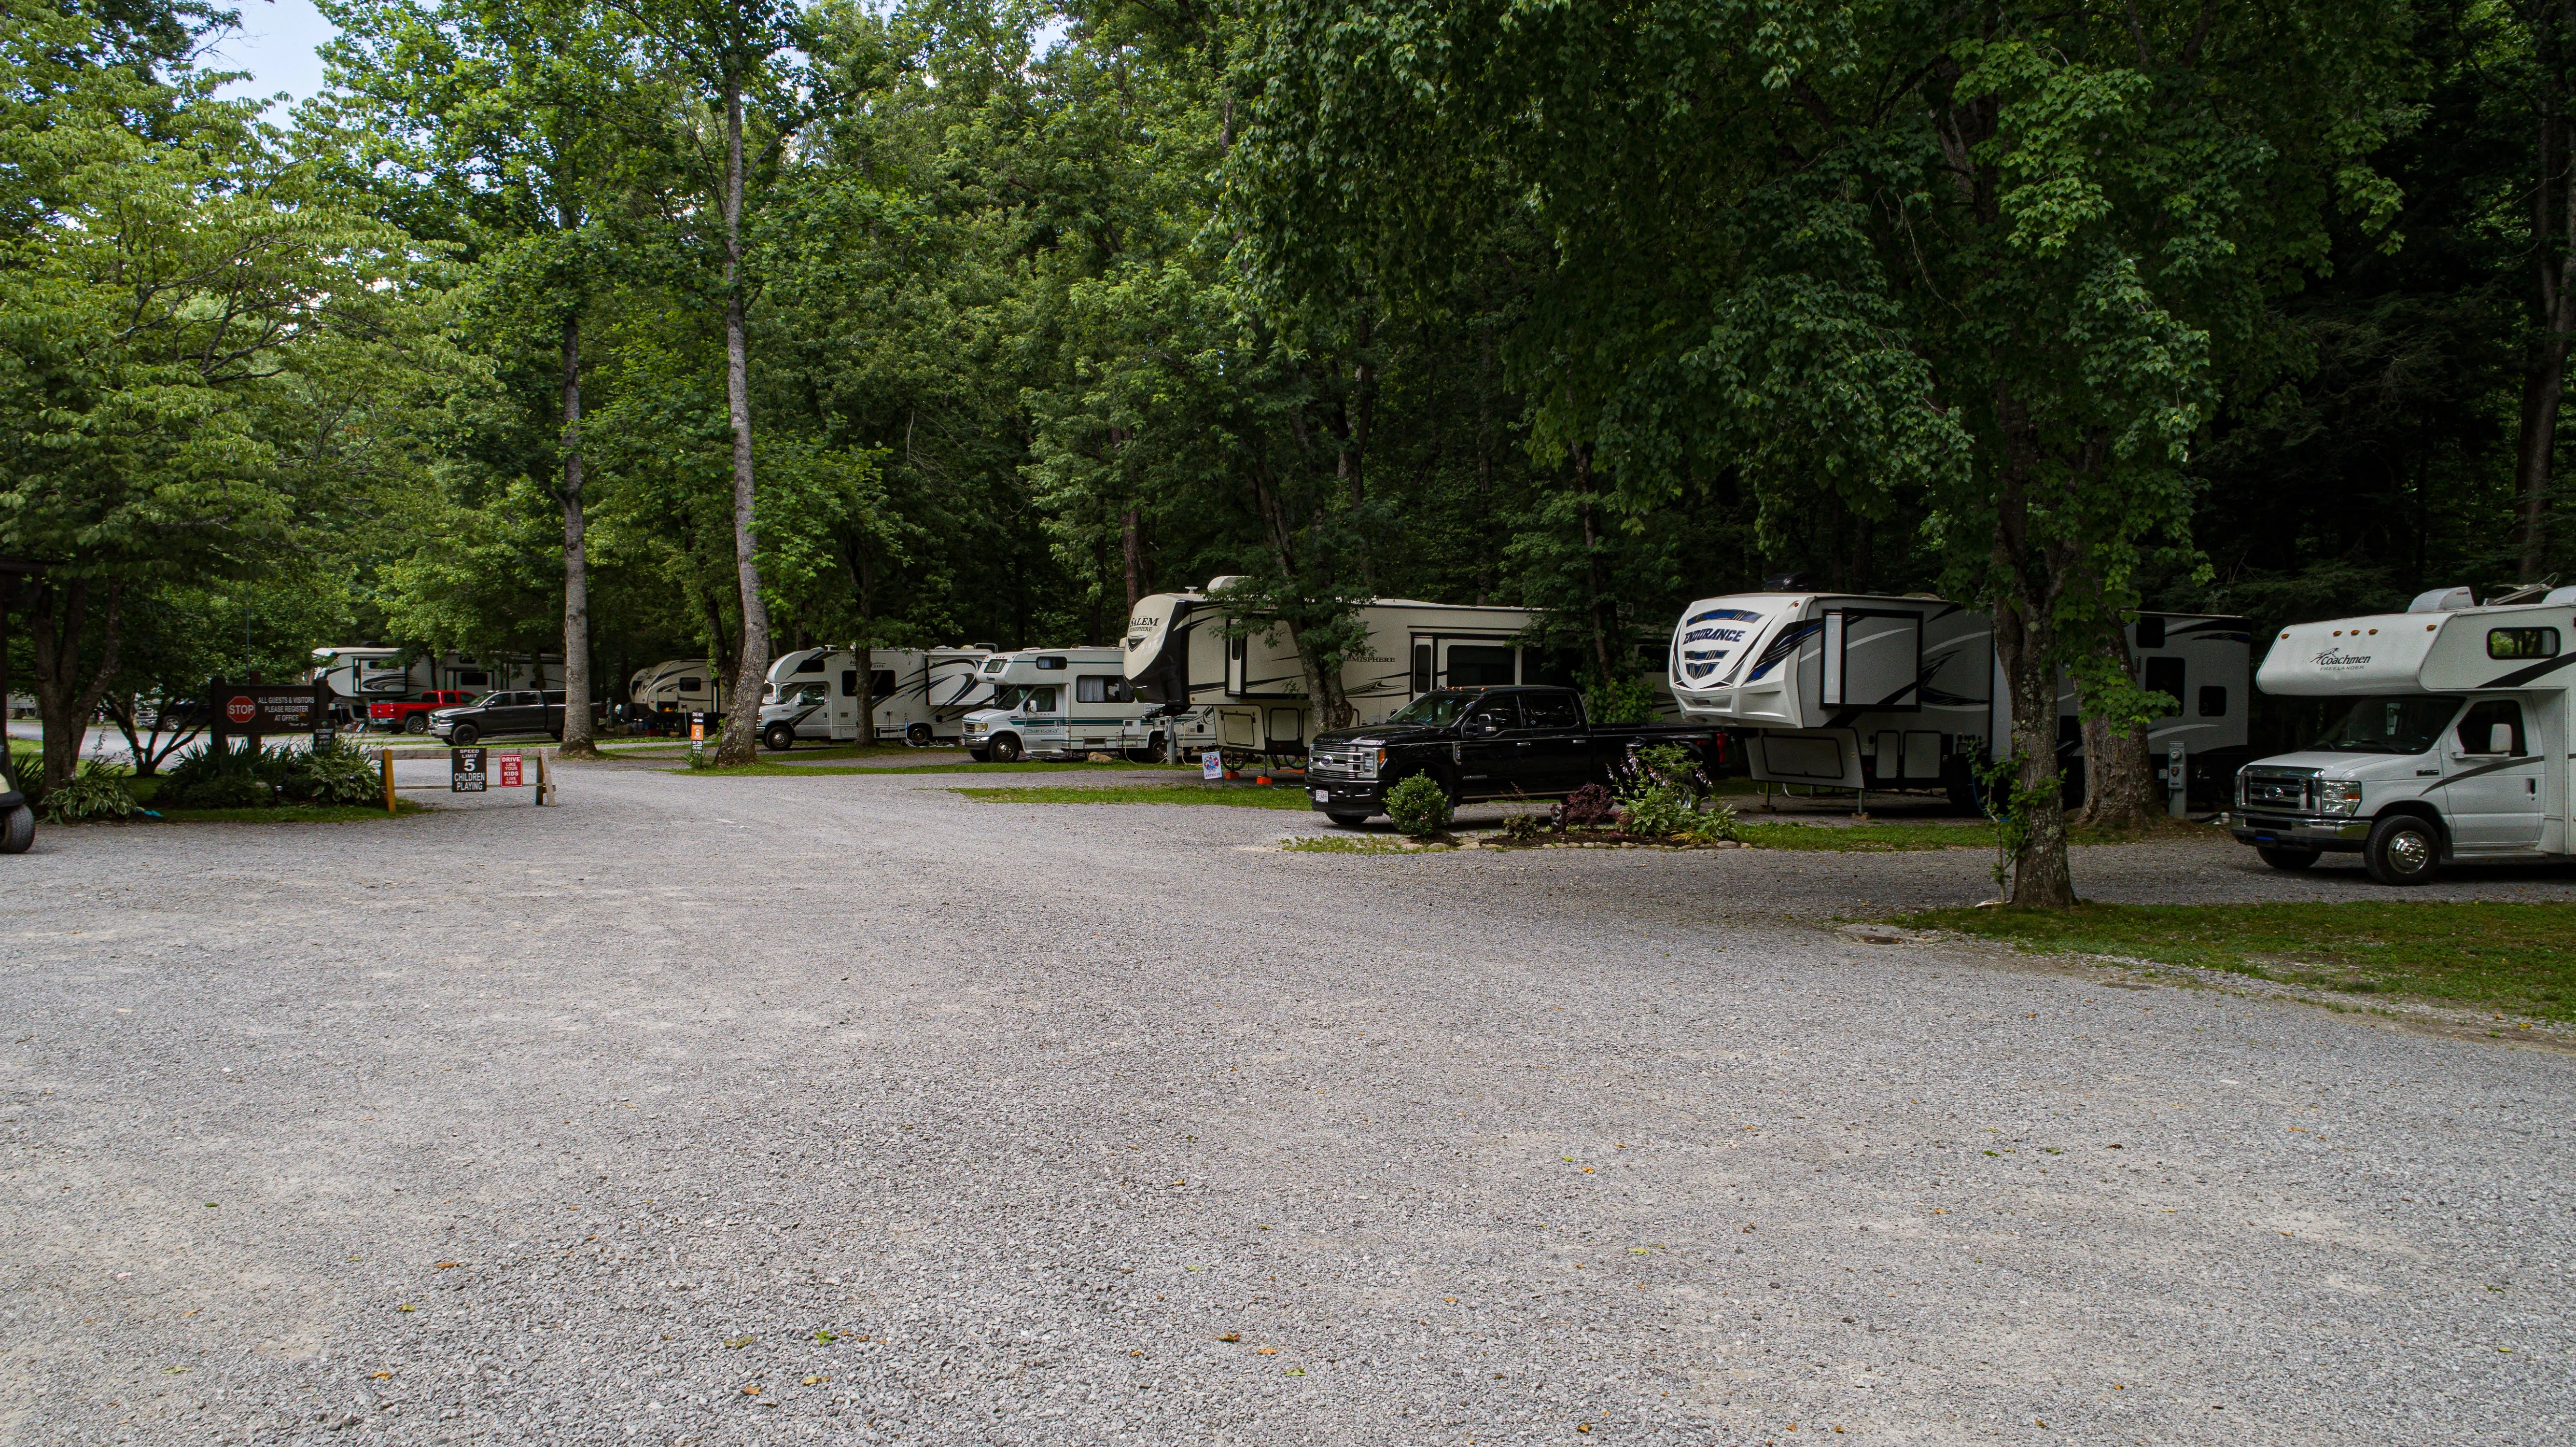 RV camping at Smoky Mountain campground